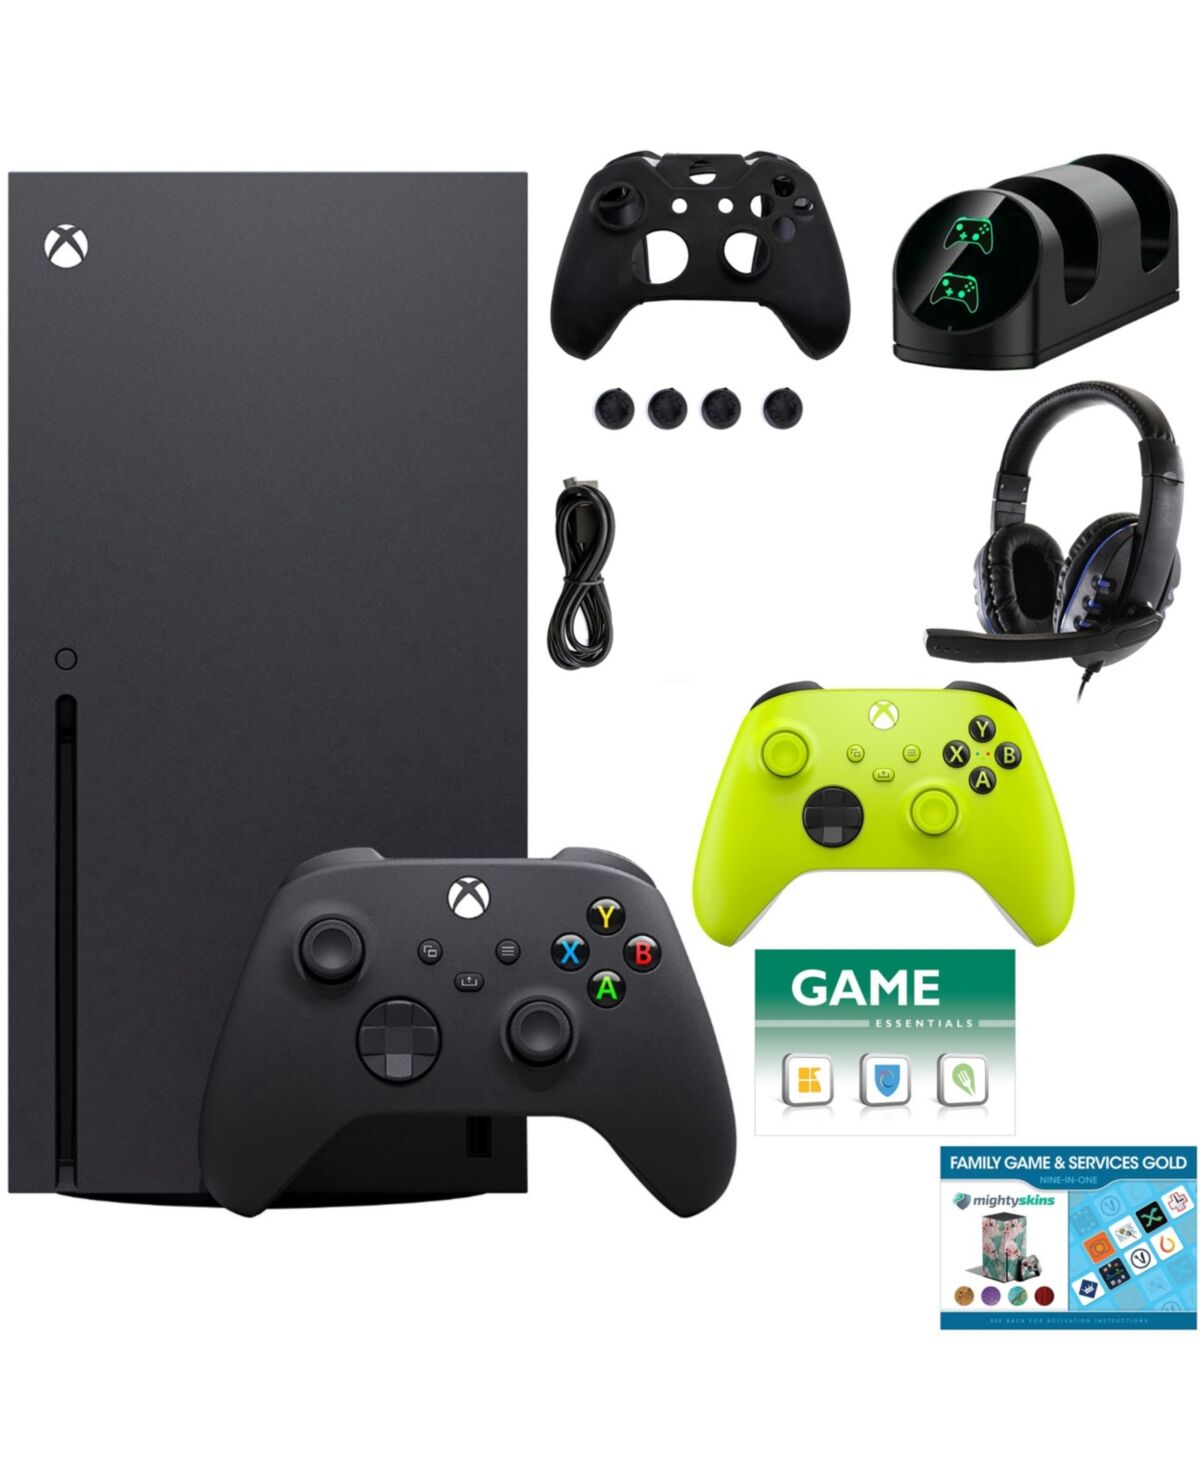 Xbox Series X 1TB Console w/ Controller Accessories Kit & 2 Vouchers - Black